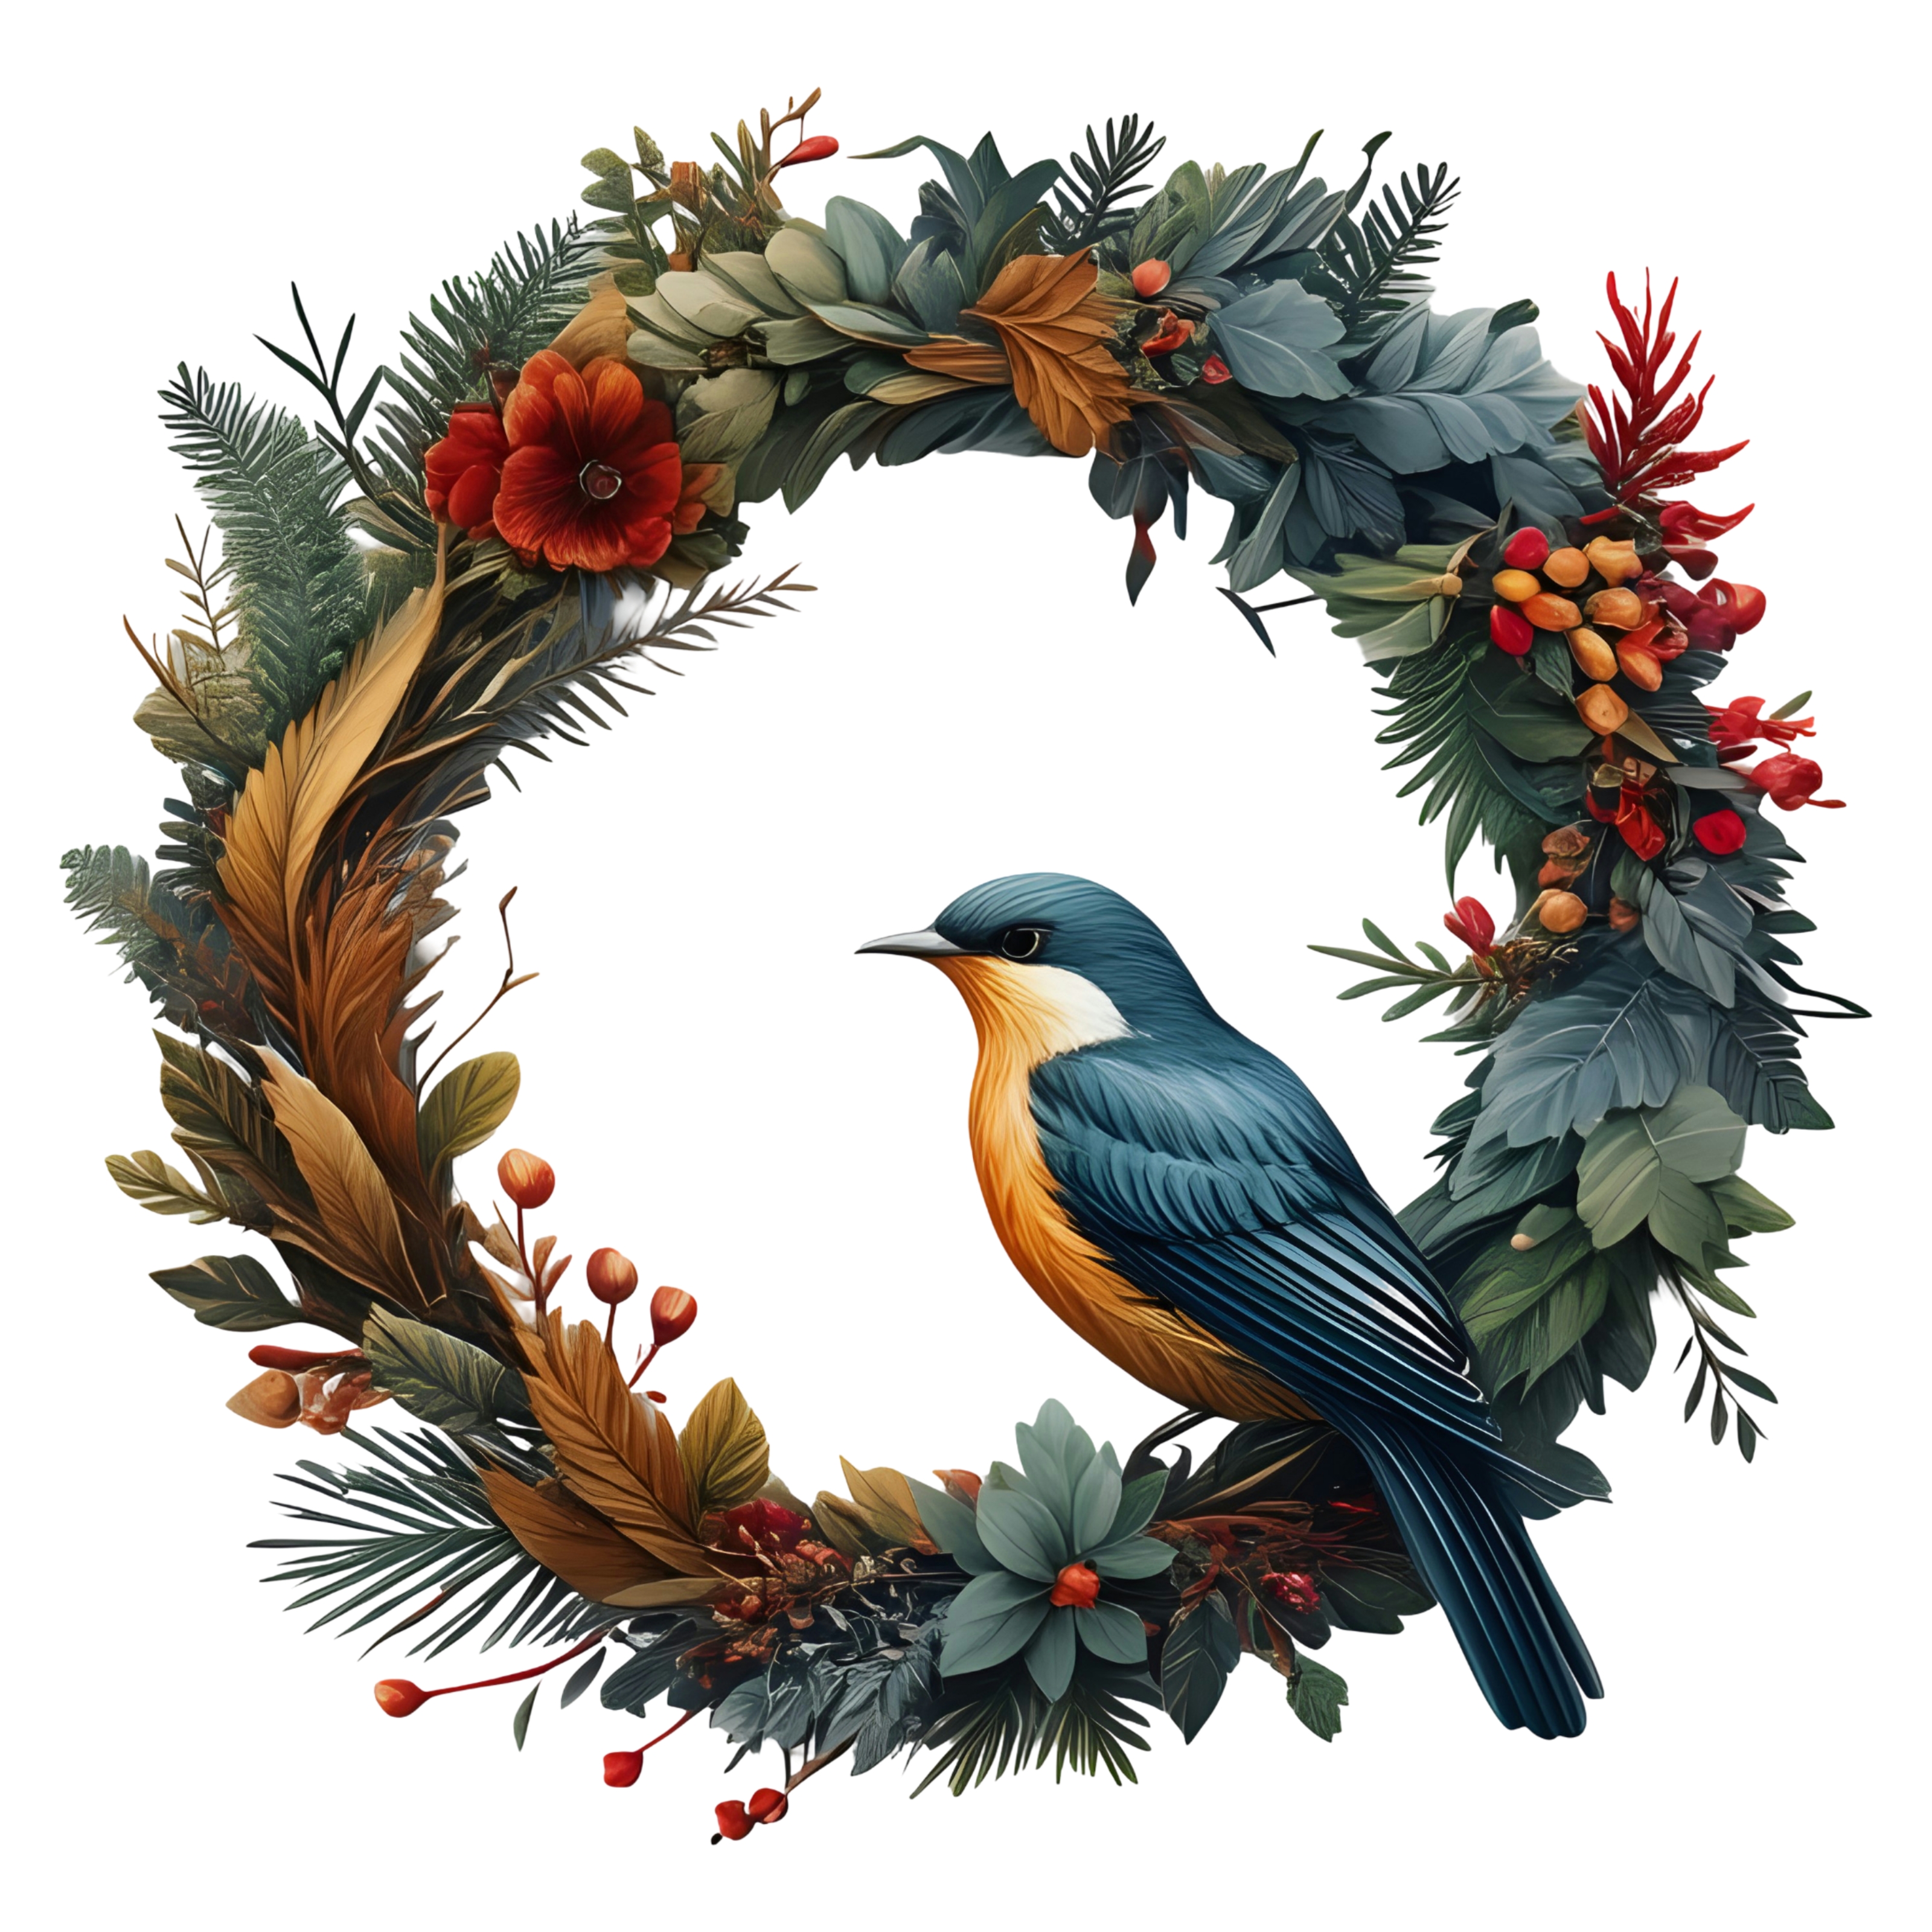 Bird and flowers wreath illustration design